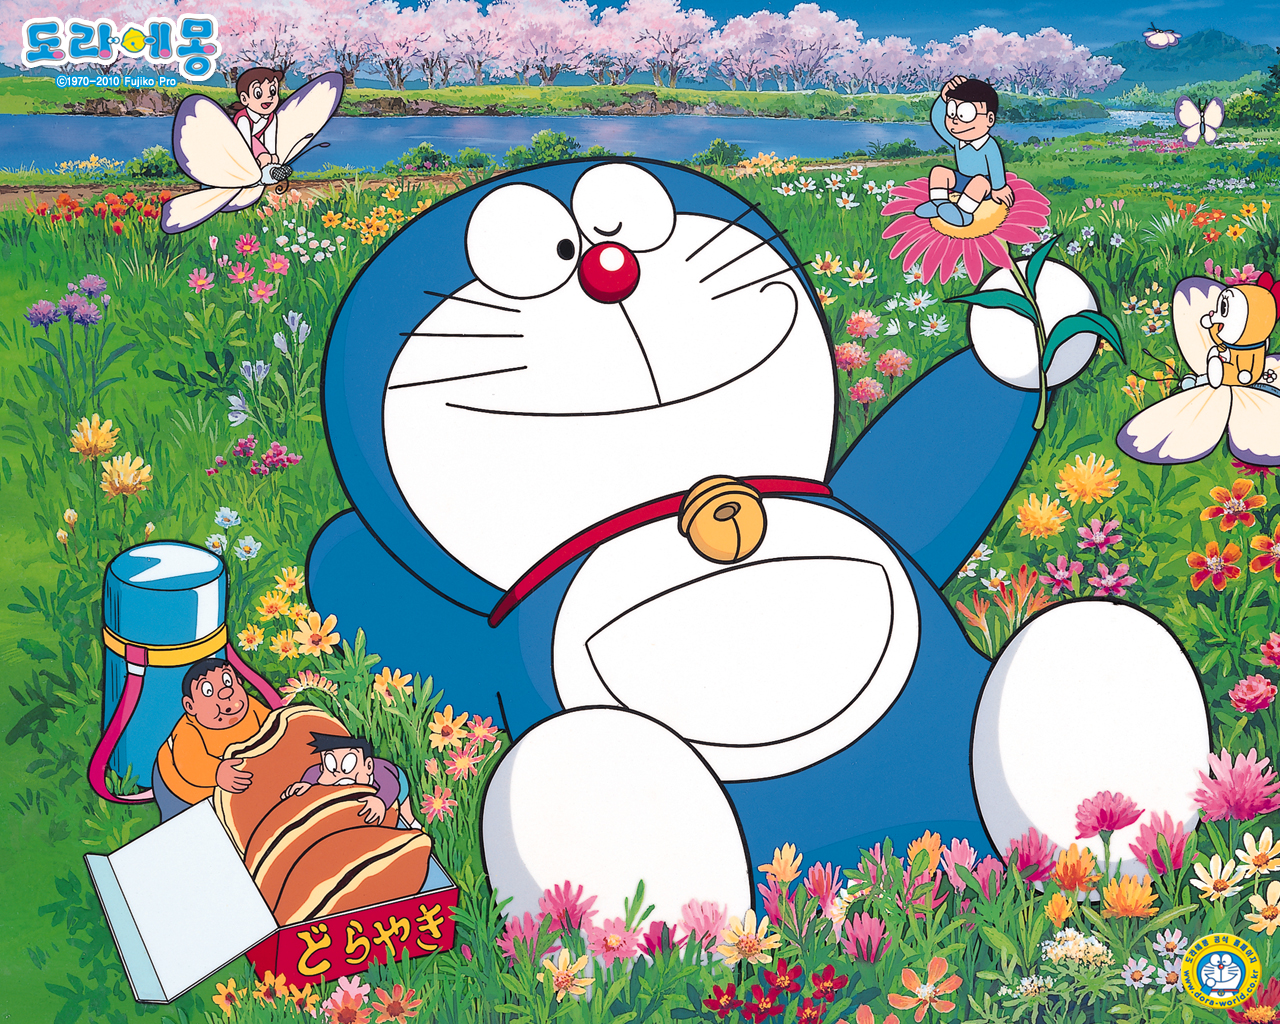 Cool Doraemon Backgrounds